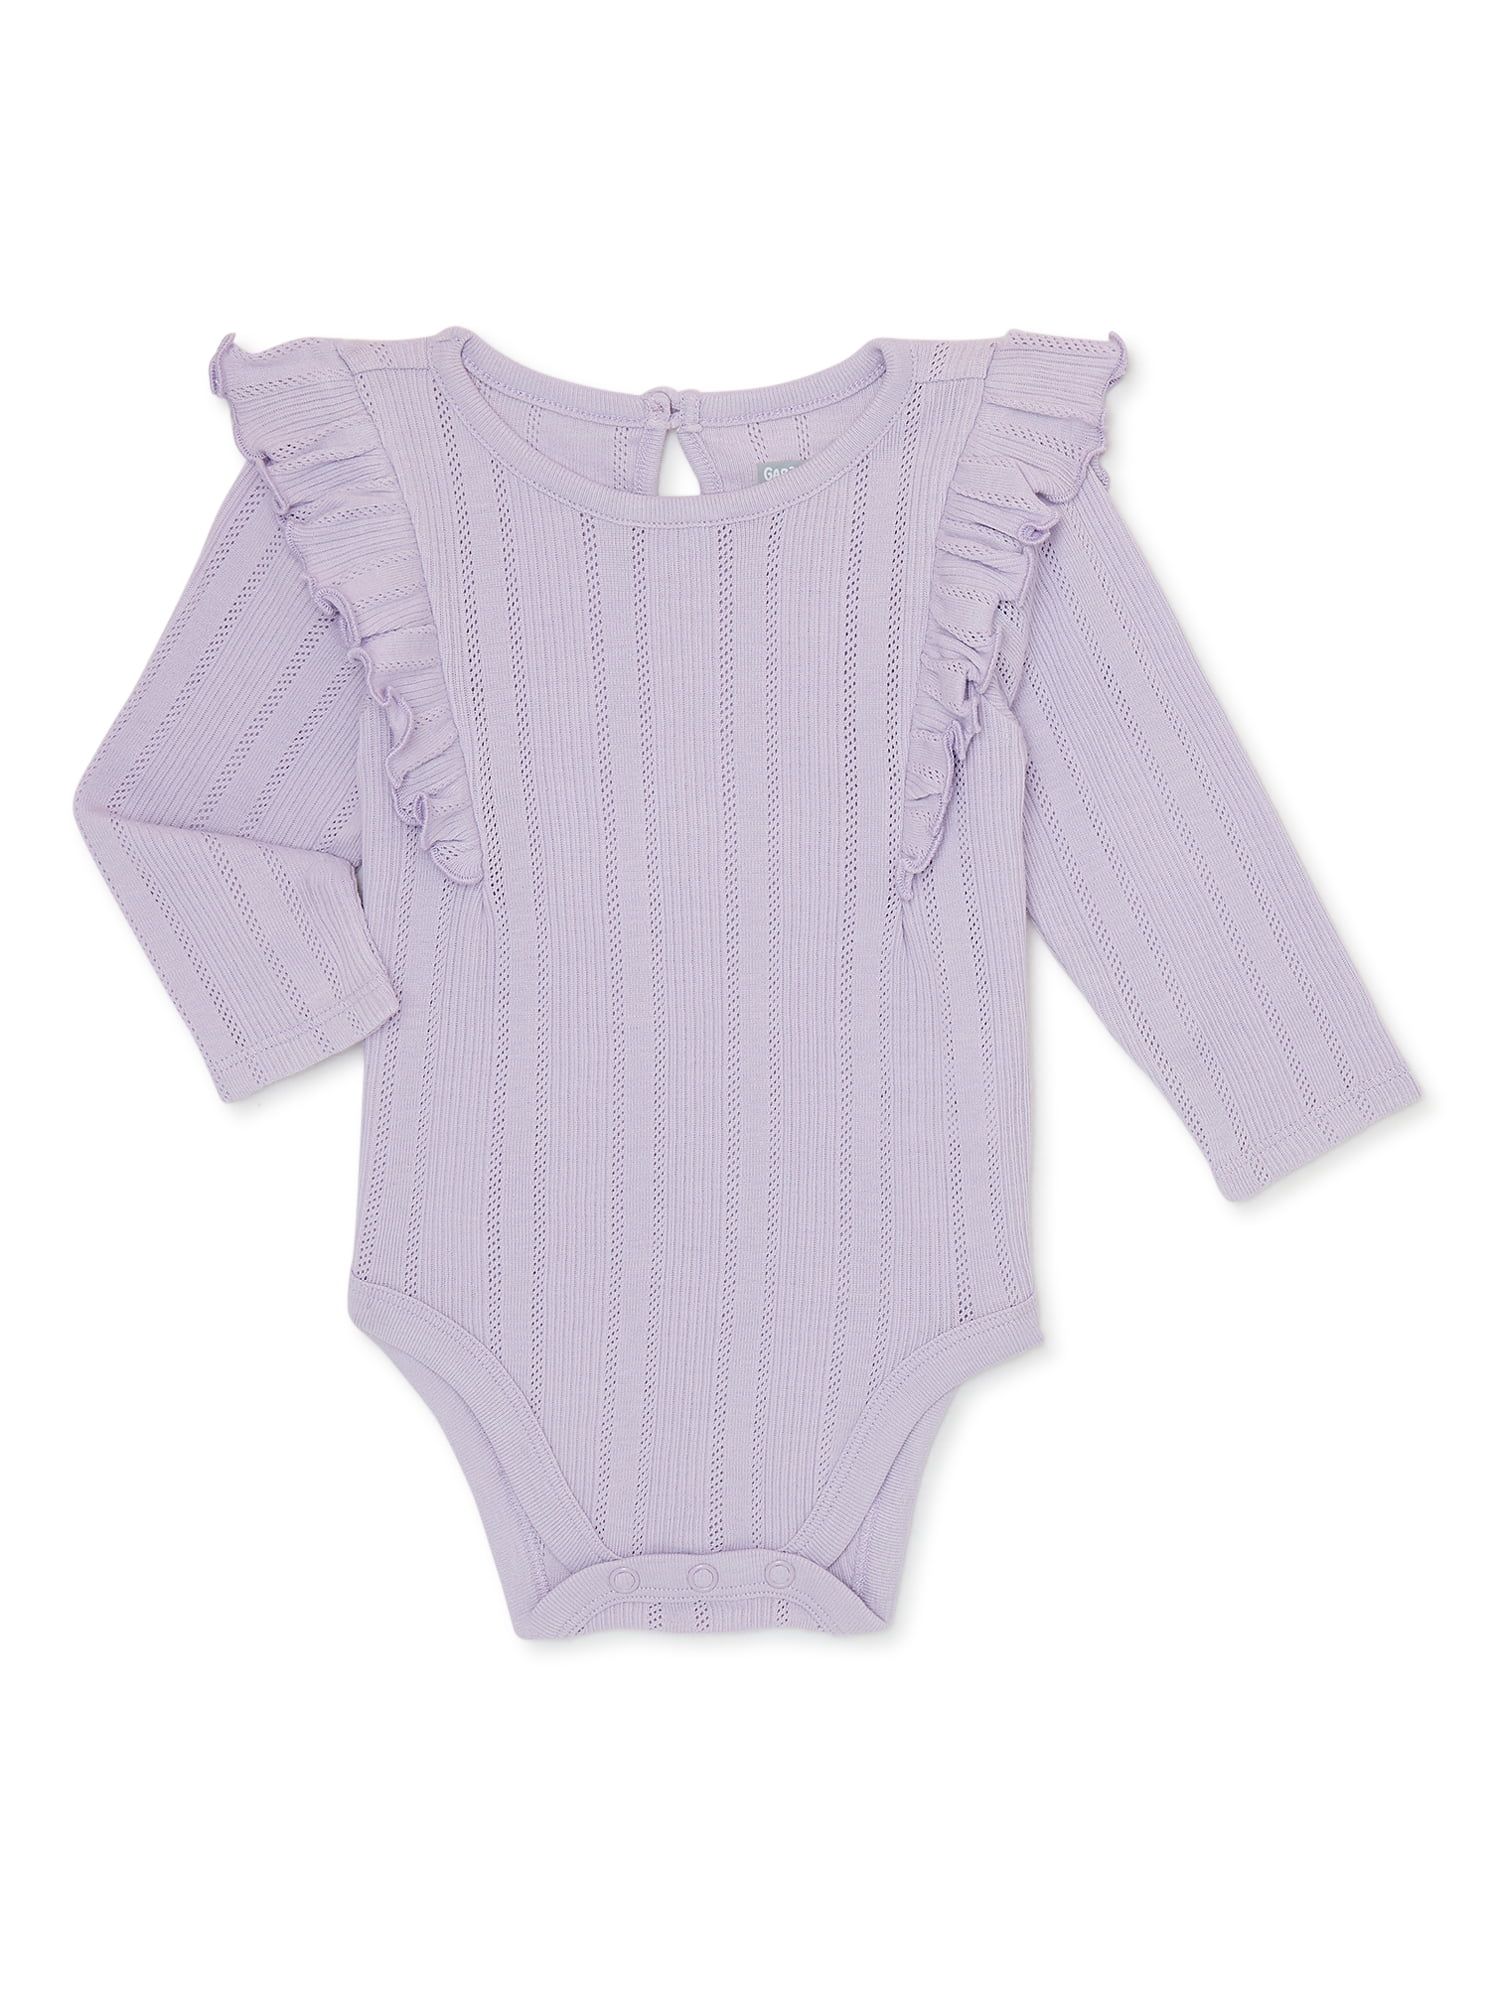 Garanimals Baby Girl Long Sleeve Flutter Bodysuit, Sizes 0 Month - 24 Months | Walmart (US)